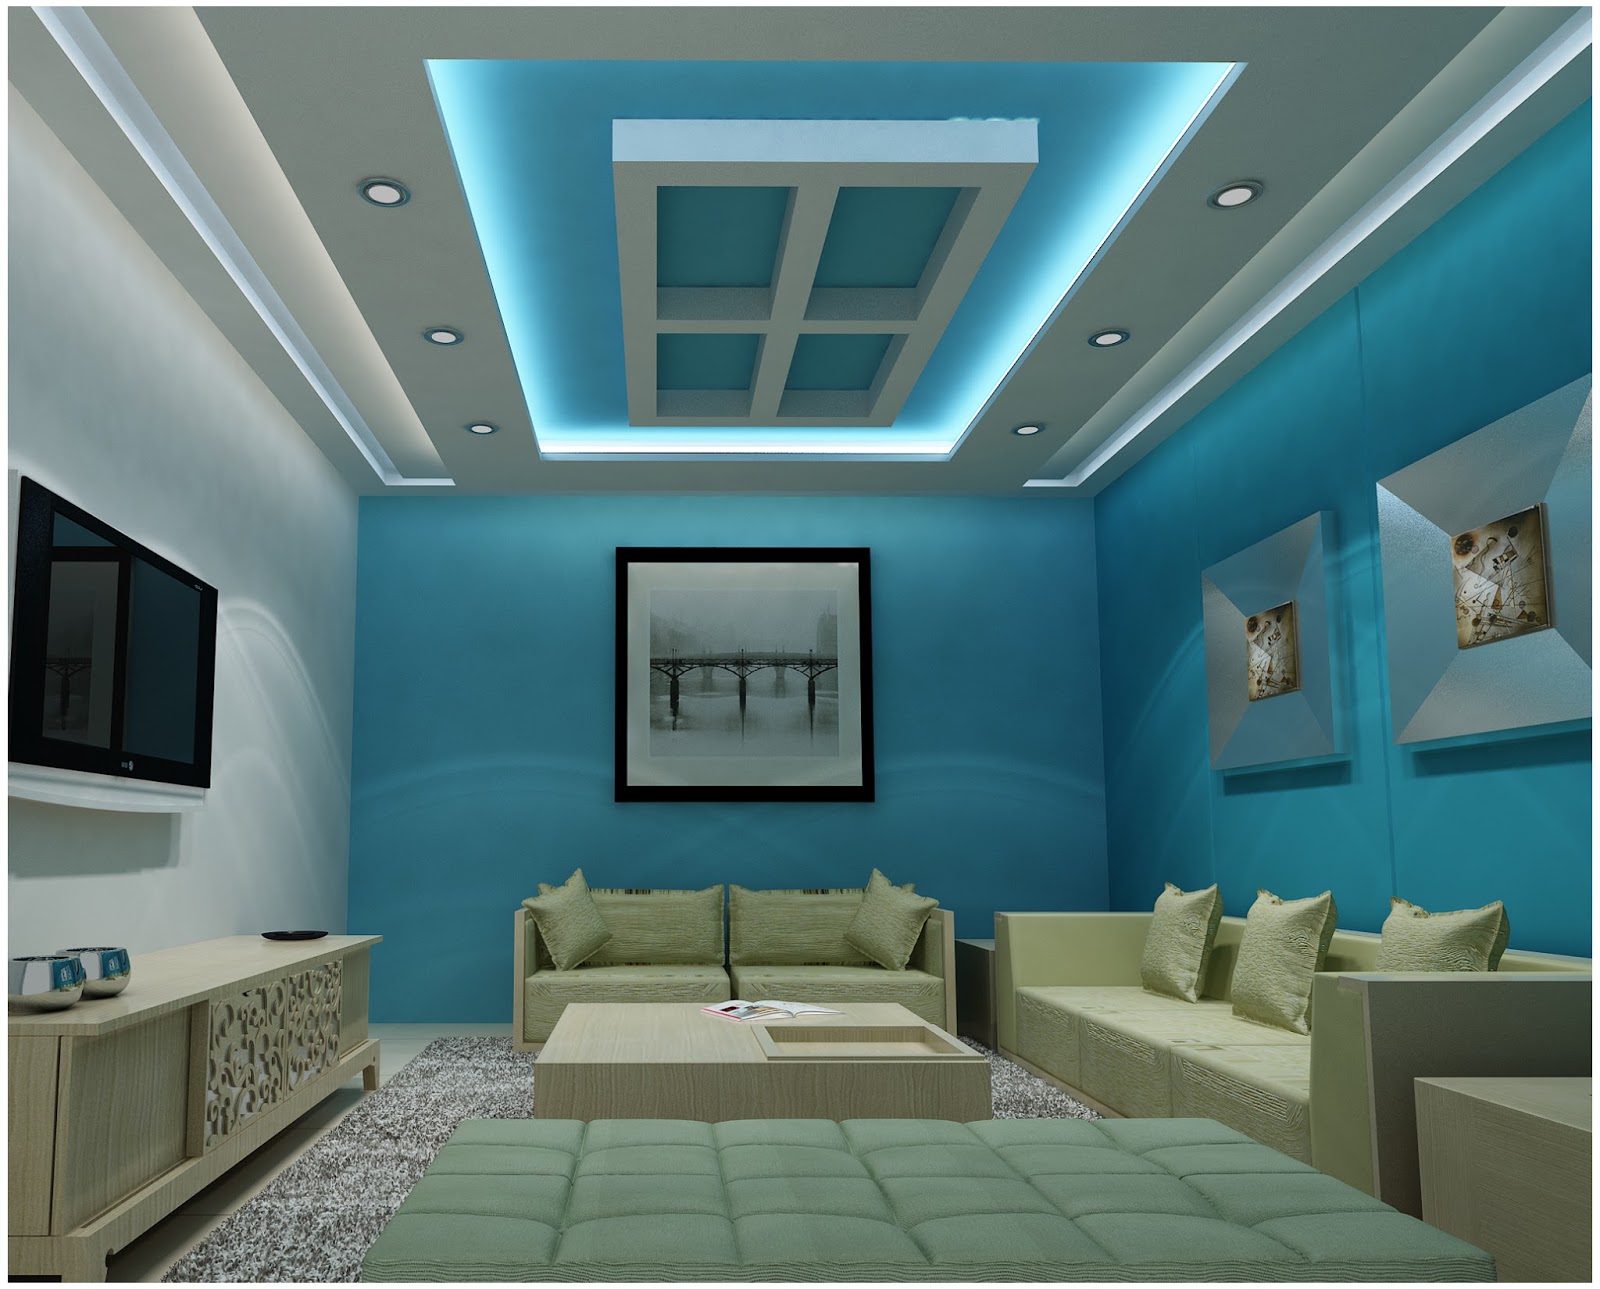  Plaster  Ceiling  Luxtury Joy Studio Design  Gallery Best 